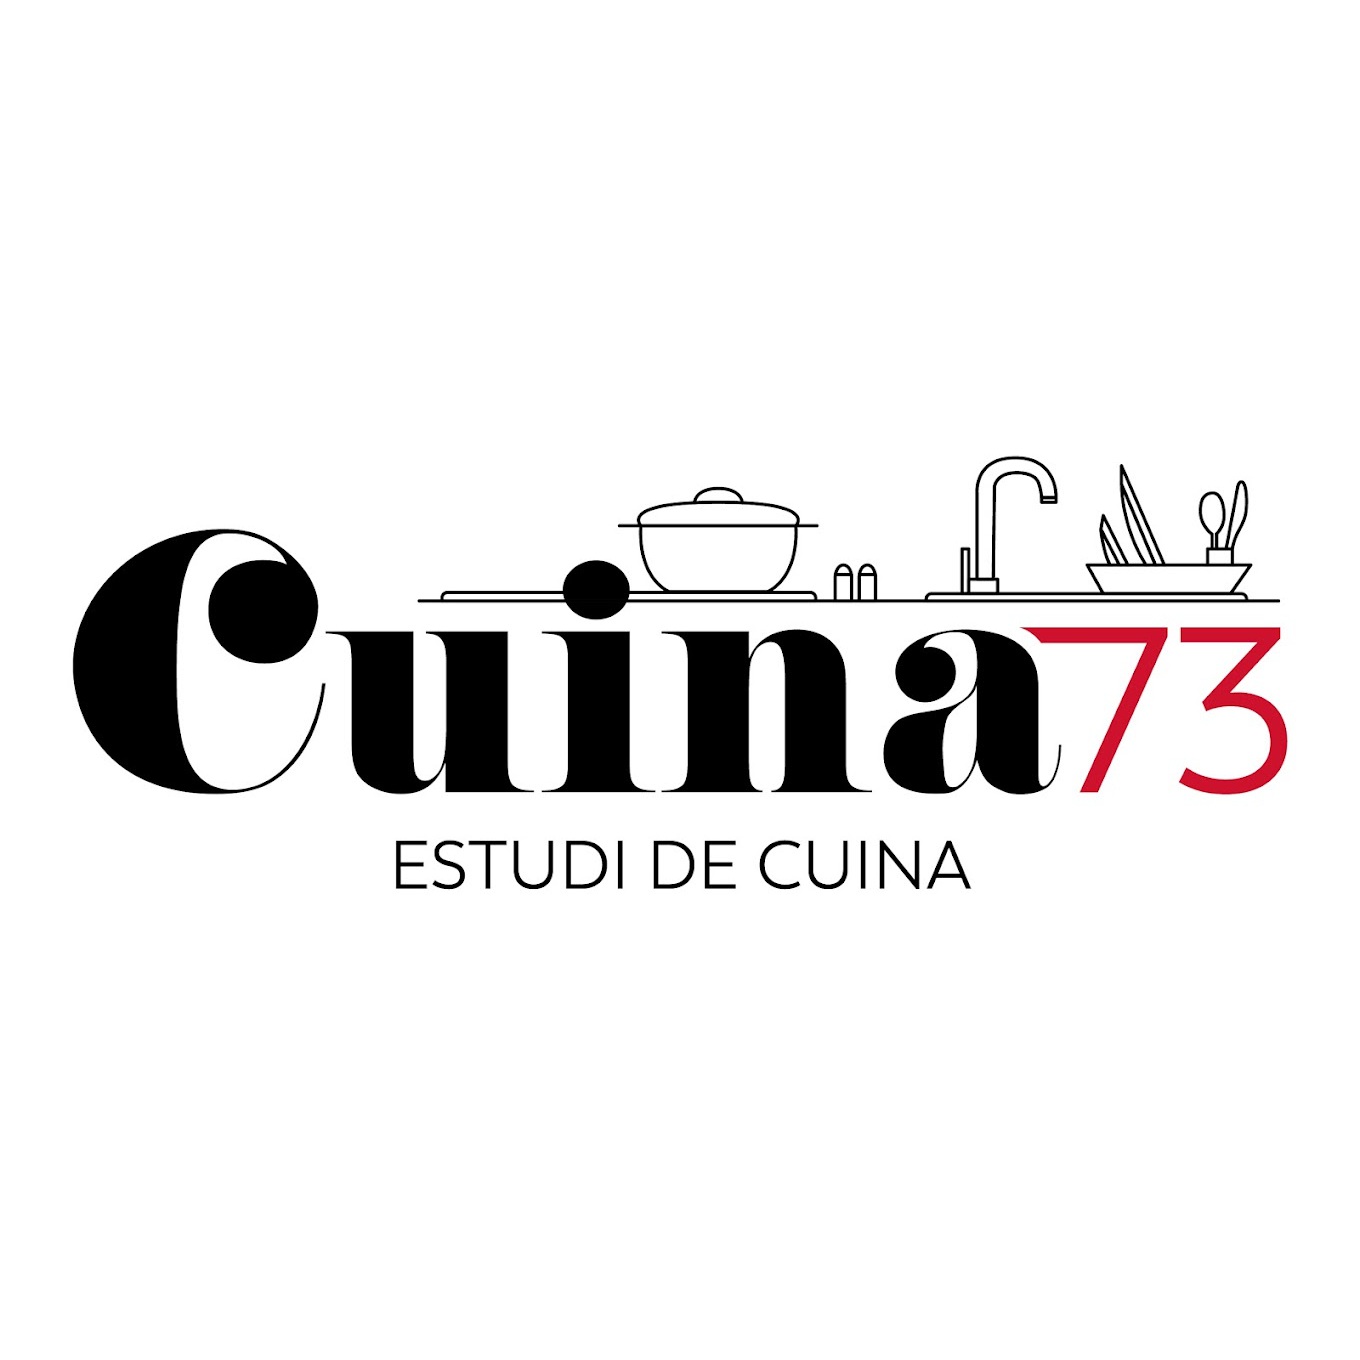 Cuina73 Logo